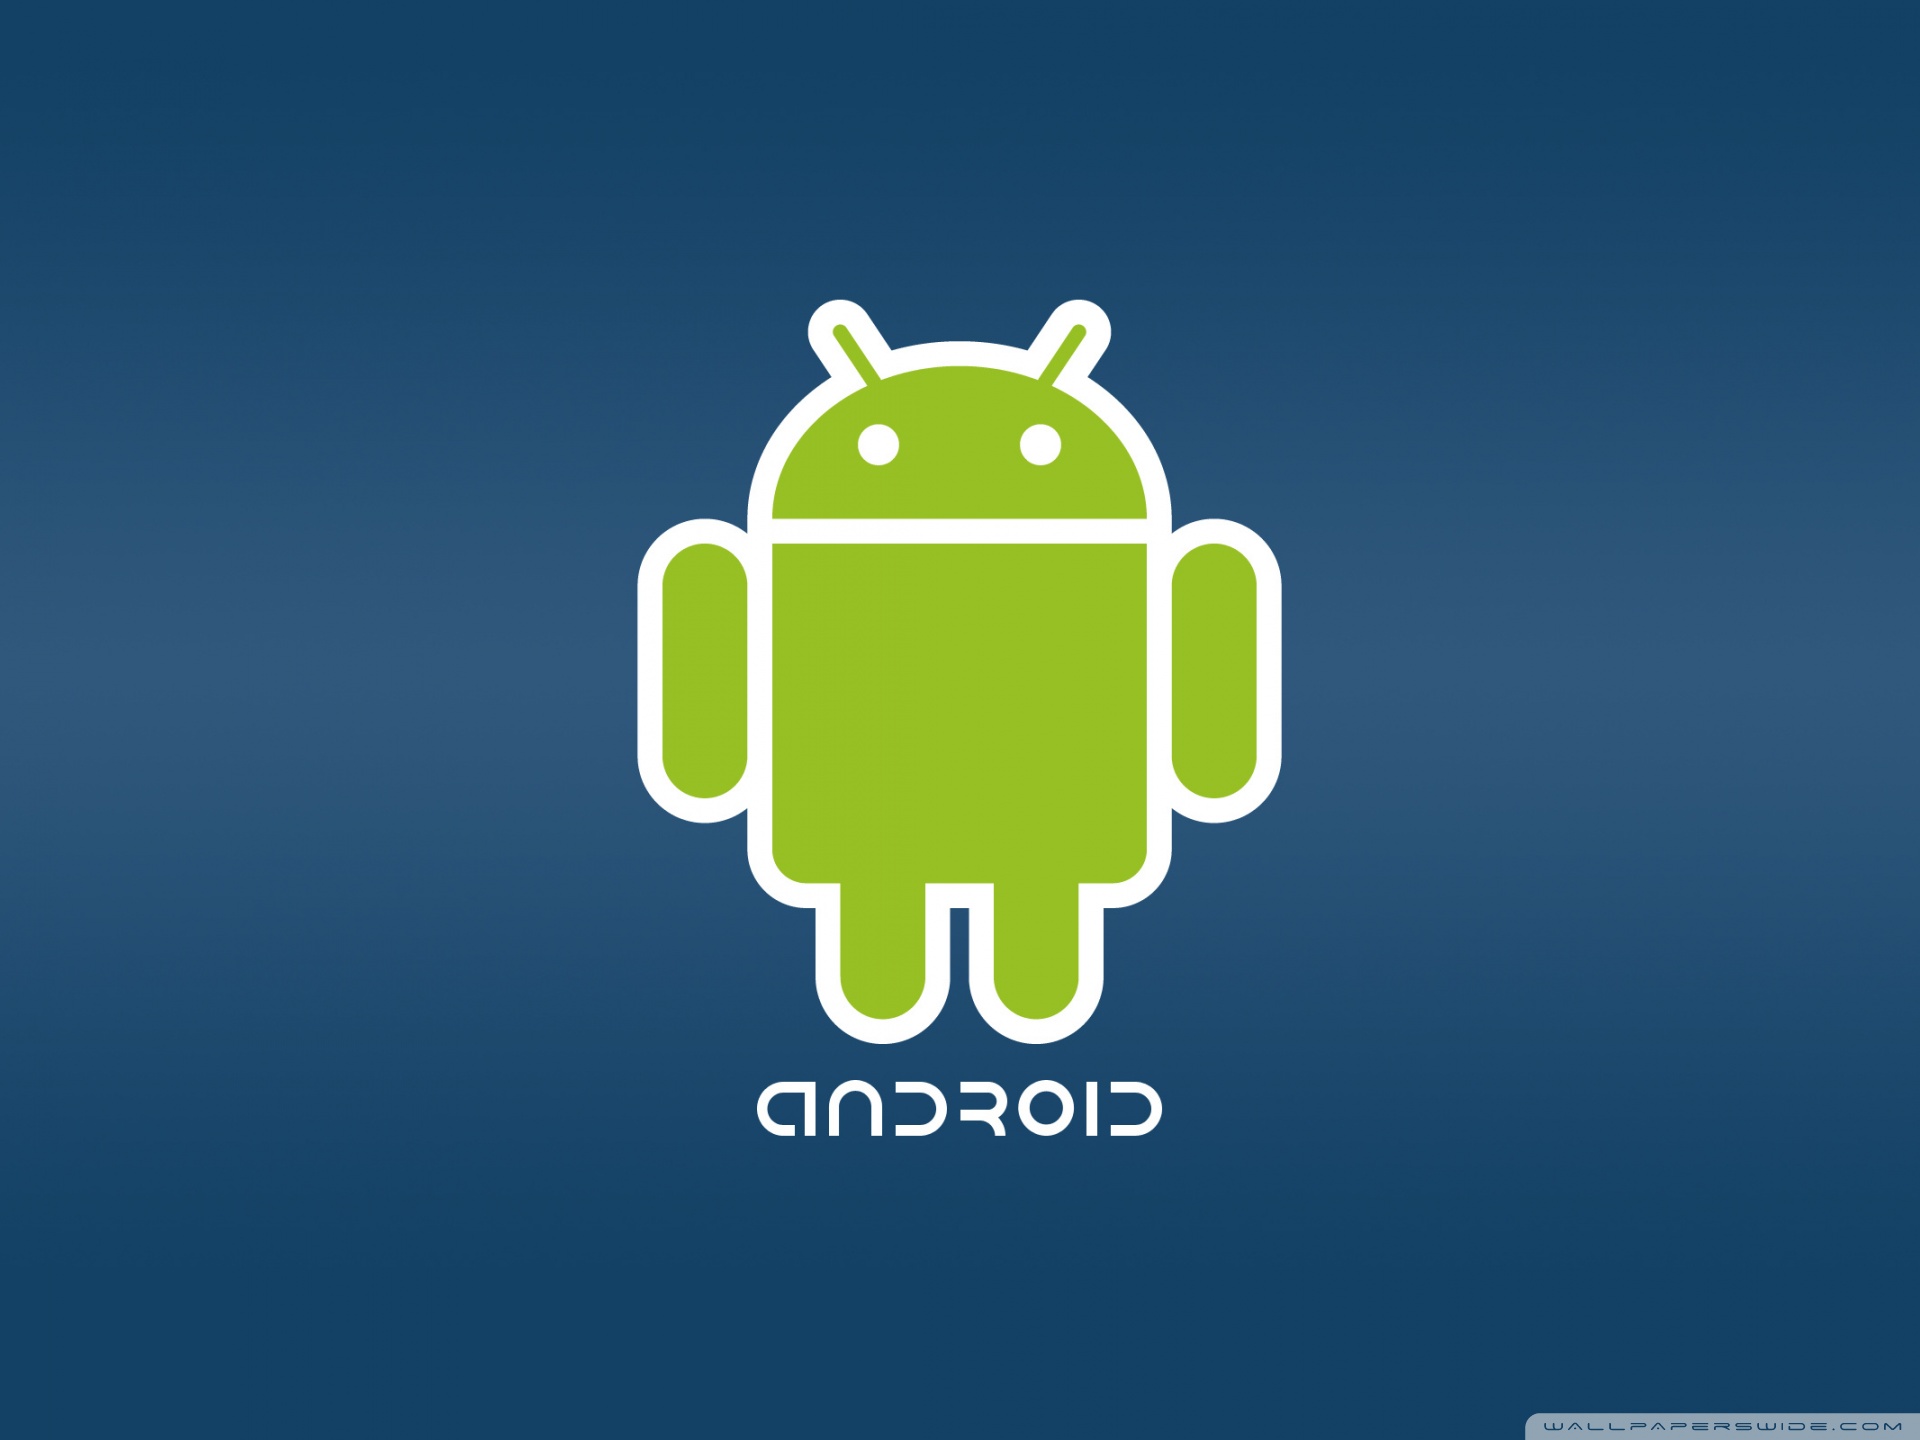 Android logo blue green | wallpaper.sc SmartPhone